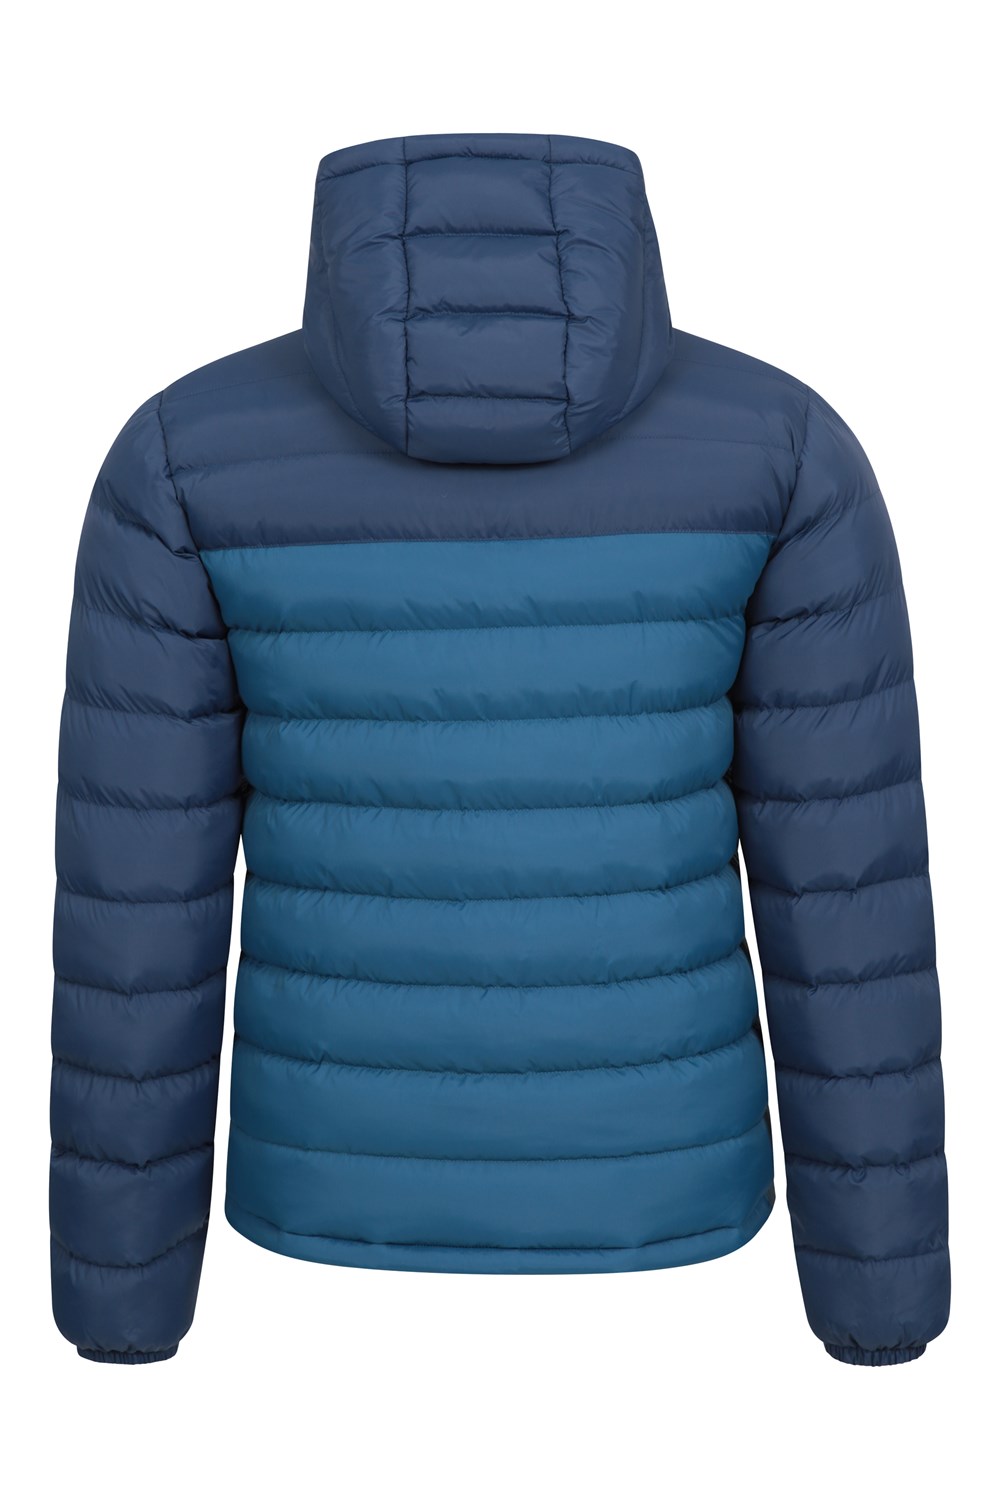 miniature 84 - Mountain Warehouse Mens Seasons Padded Jacket Puffer Water Resistant Winter Coat